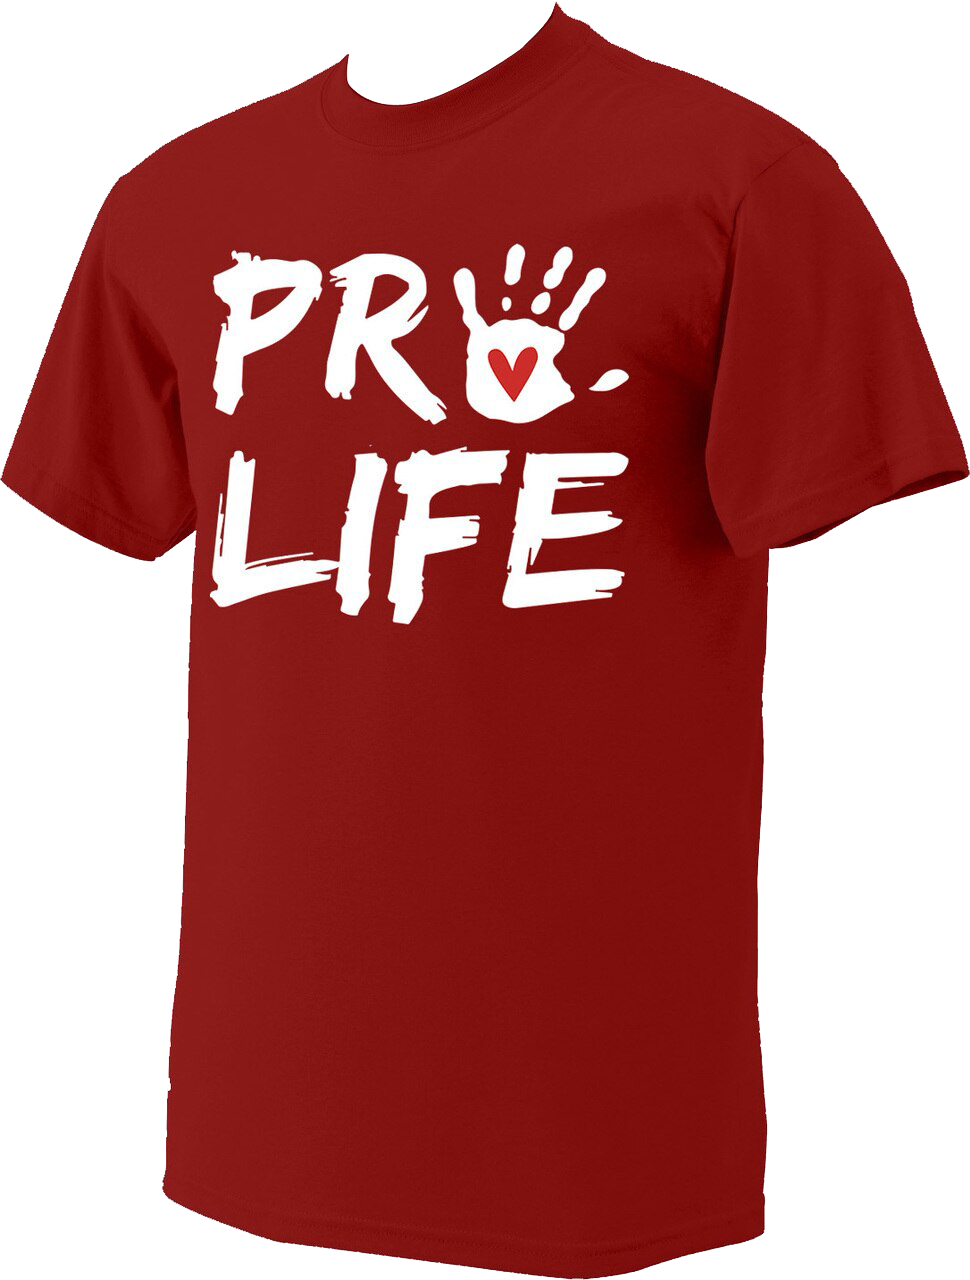 Pro Life T-shirt